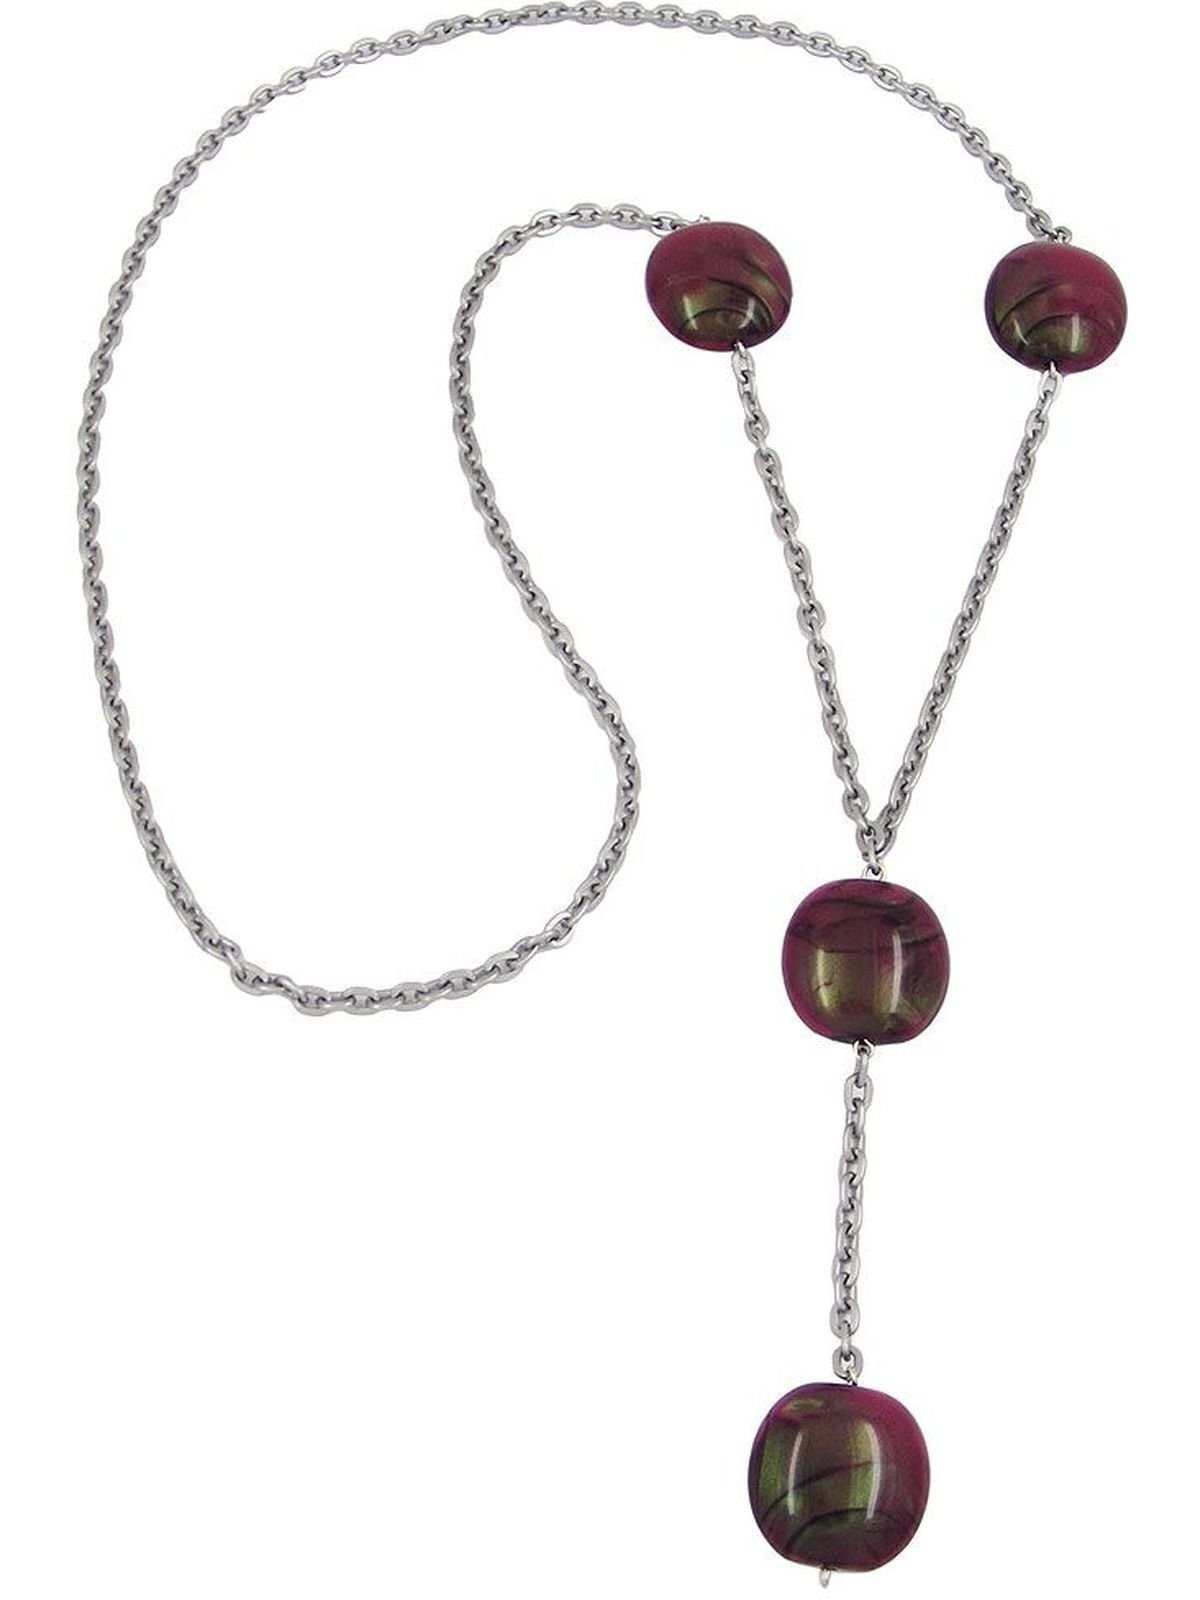 Gallay Perlenkette Kunststoffperlen Nugget Eloxal grau 100cm Ankerkette pflaume-seide-matt